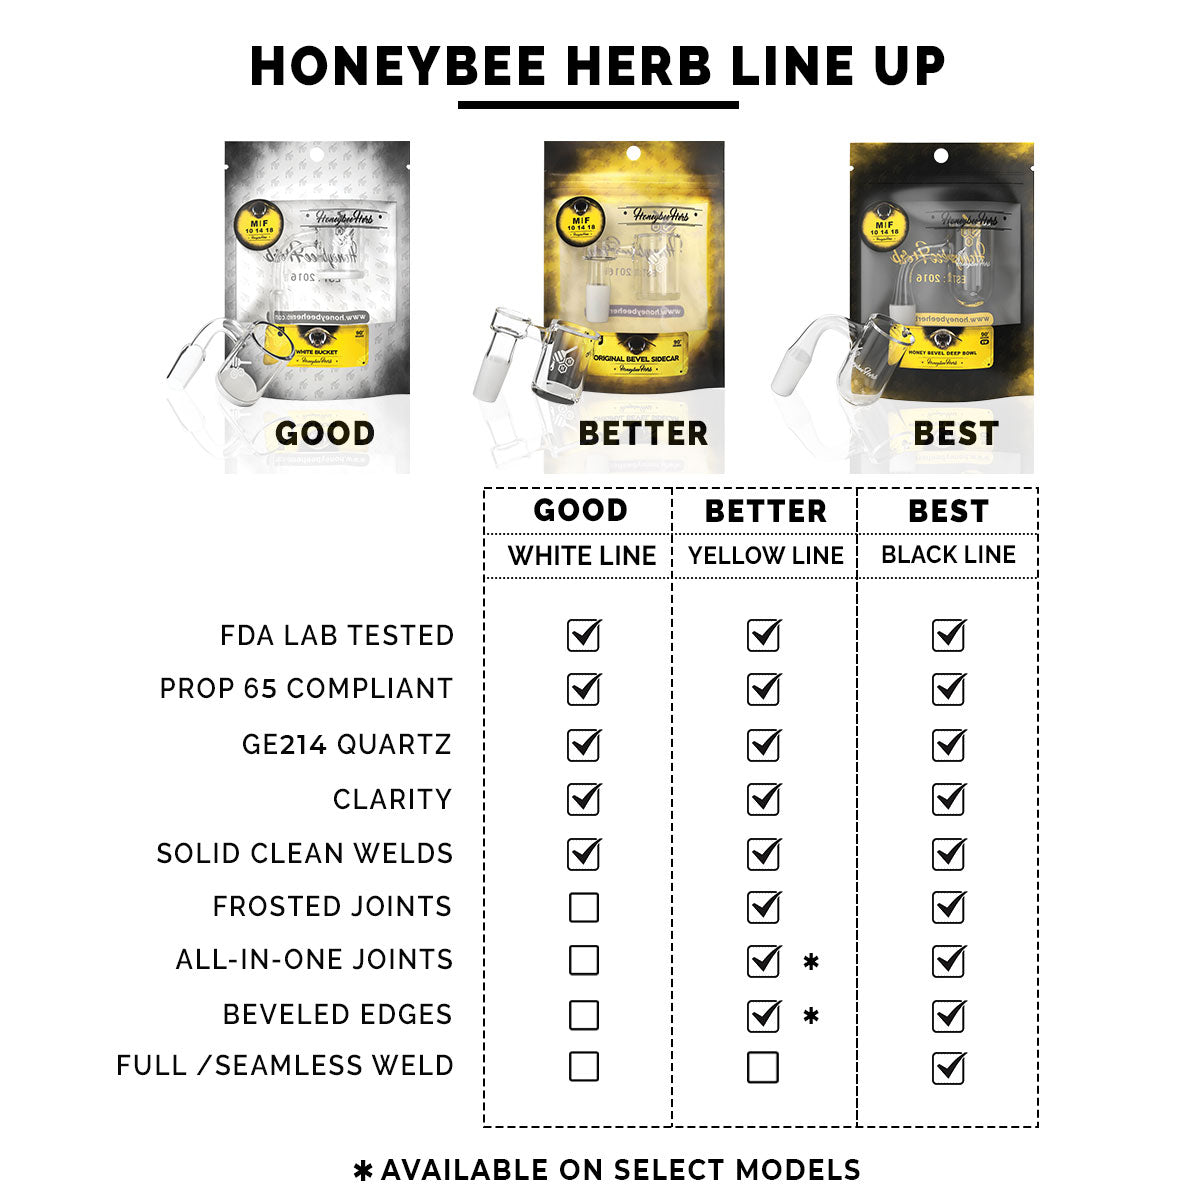 Honeybee Herb Quartz Nail lineup chart showing features for Good, Better, Best categories